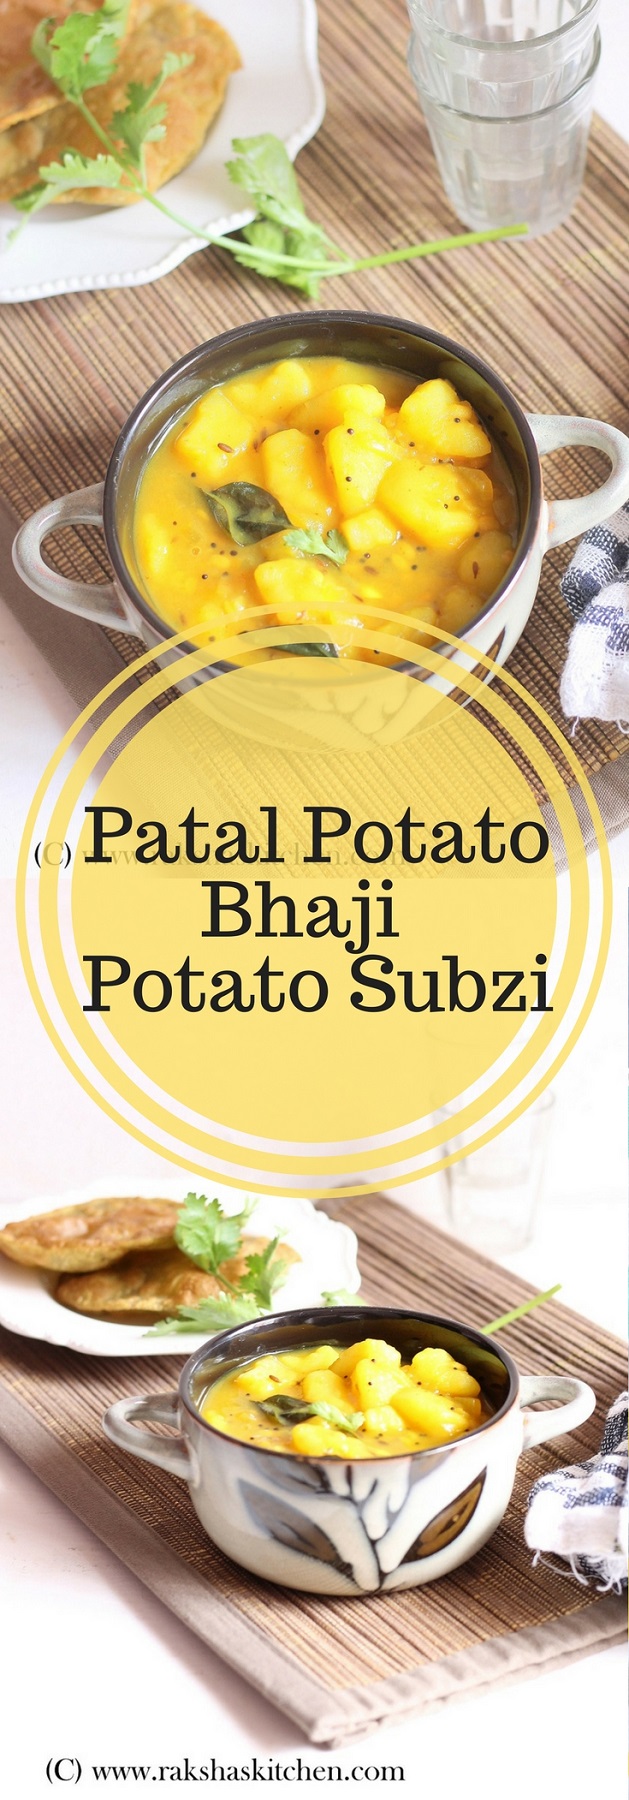 Potato bhaji, Potato subzi, Patal potato bhaji, Bataat bhaji, Batat bhaji